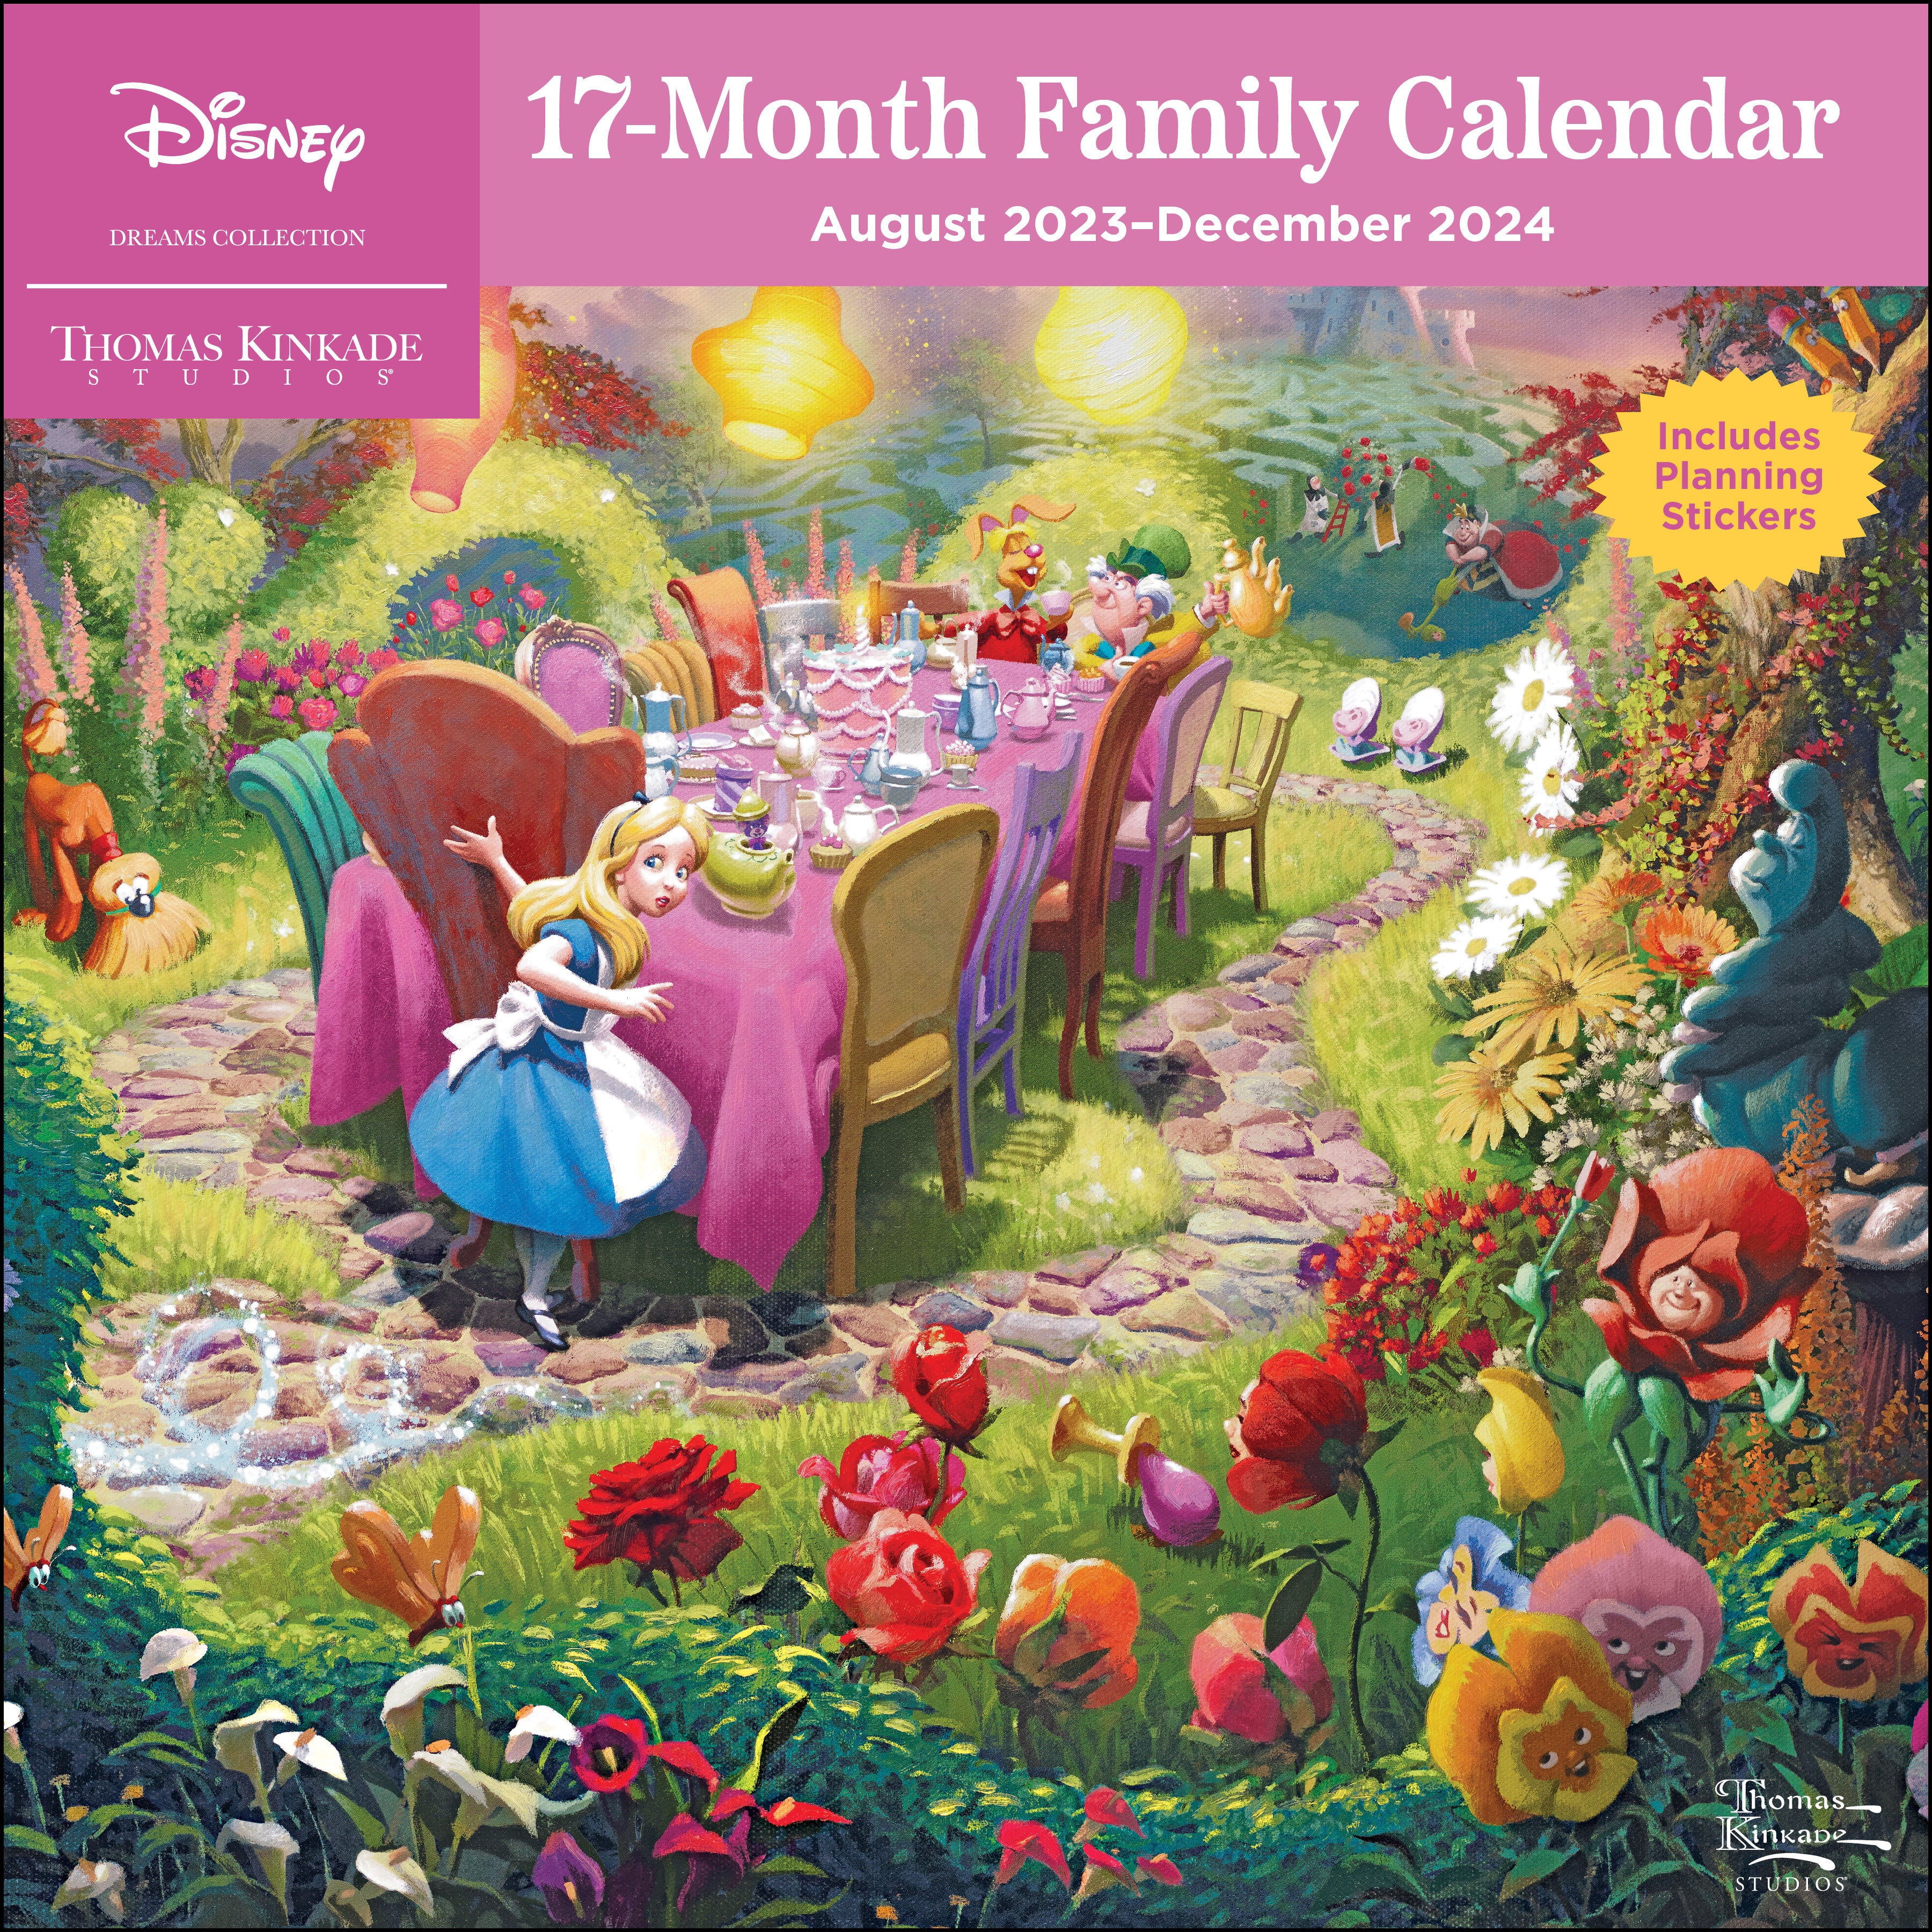 Dreams　Disney　2023-2024　Studios:　Collection　by　Kinkade　Thomas　17-Month